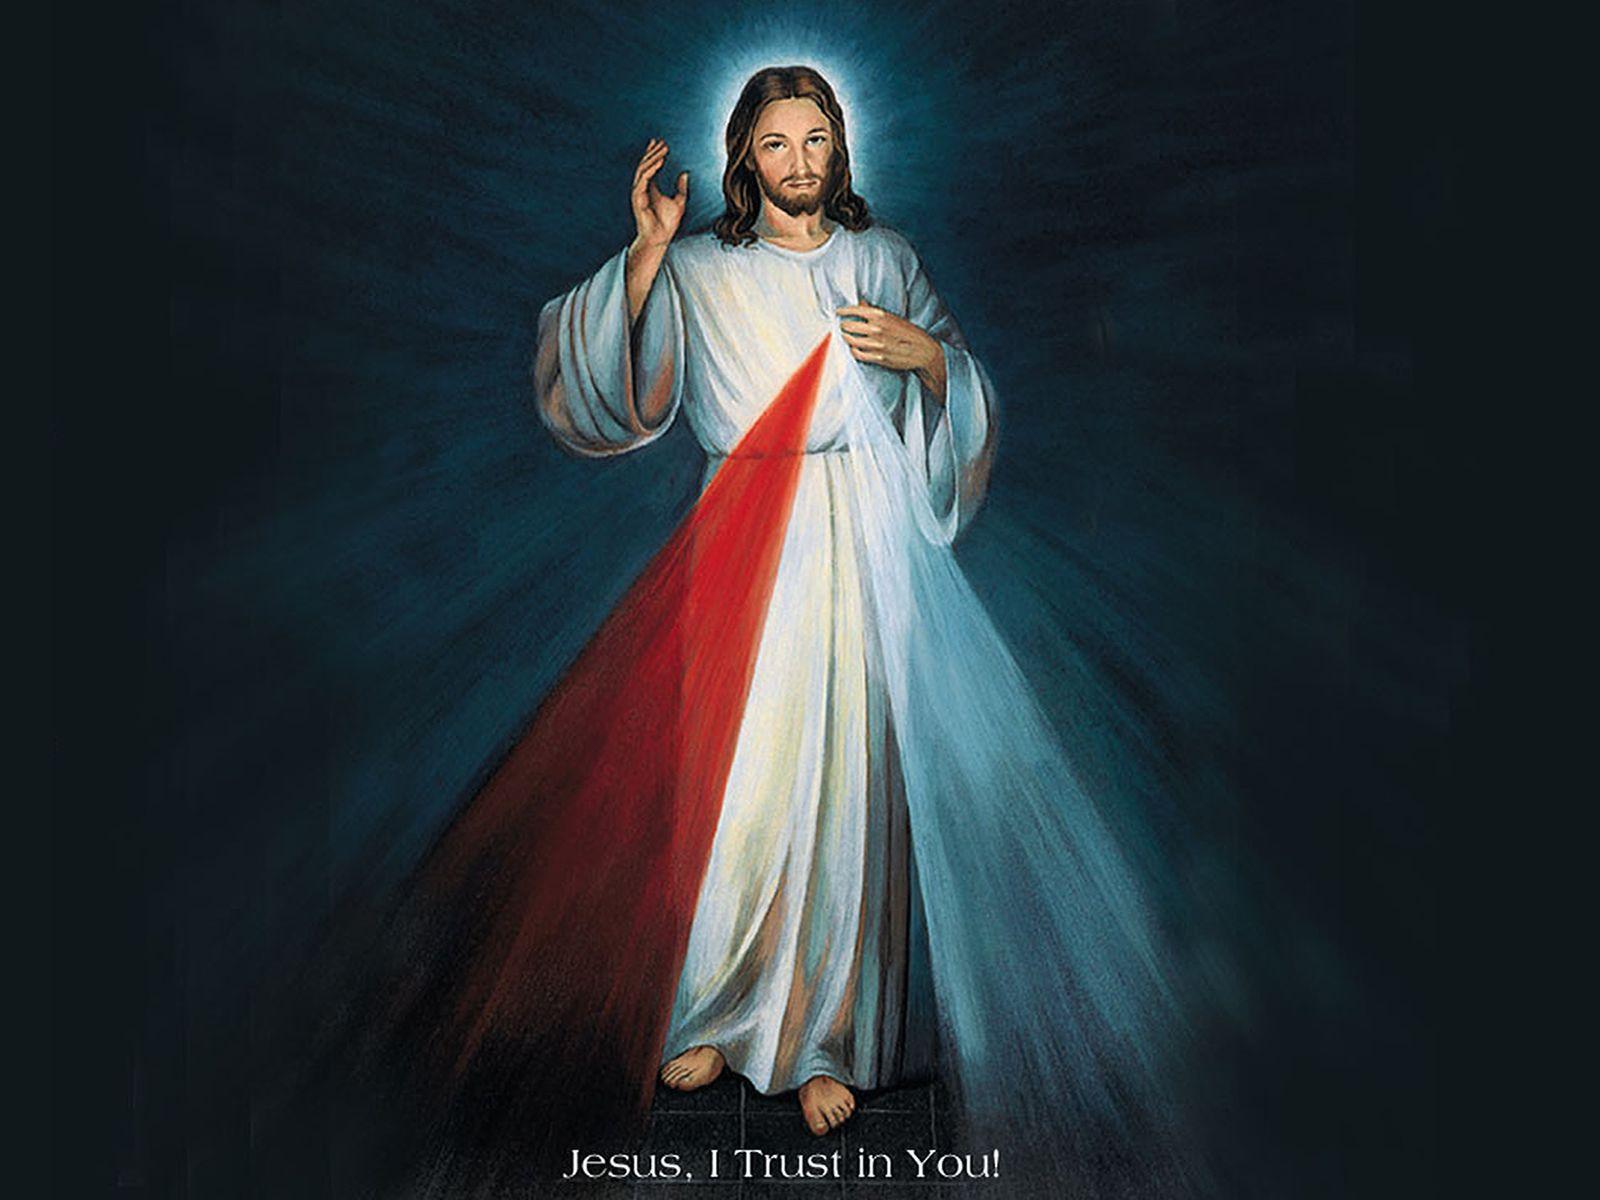 Jesus Christ Divine Mercy Hot Christian Art Metal Sign Wall Poster Tablet  Plate | eBay